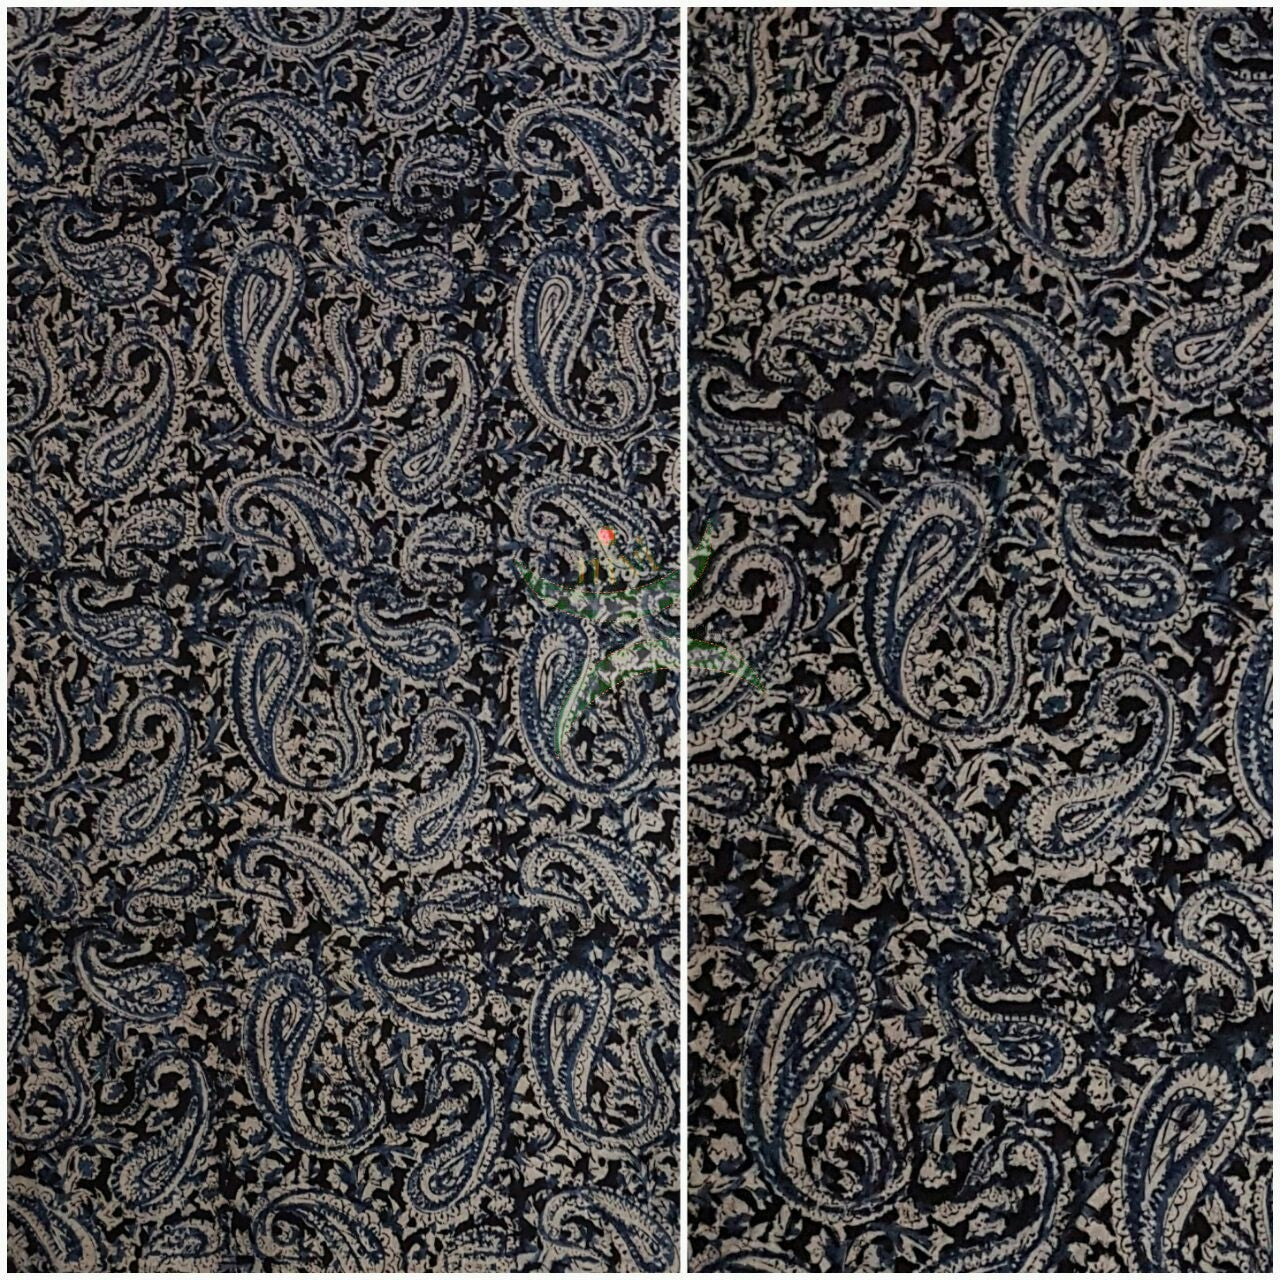 Black handwoven cotton kalamkari material with Paisley motifs.